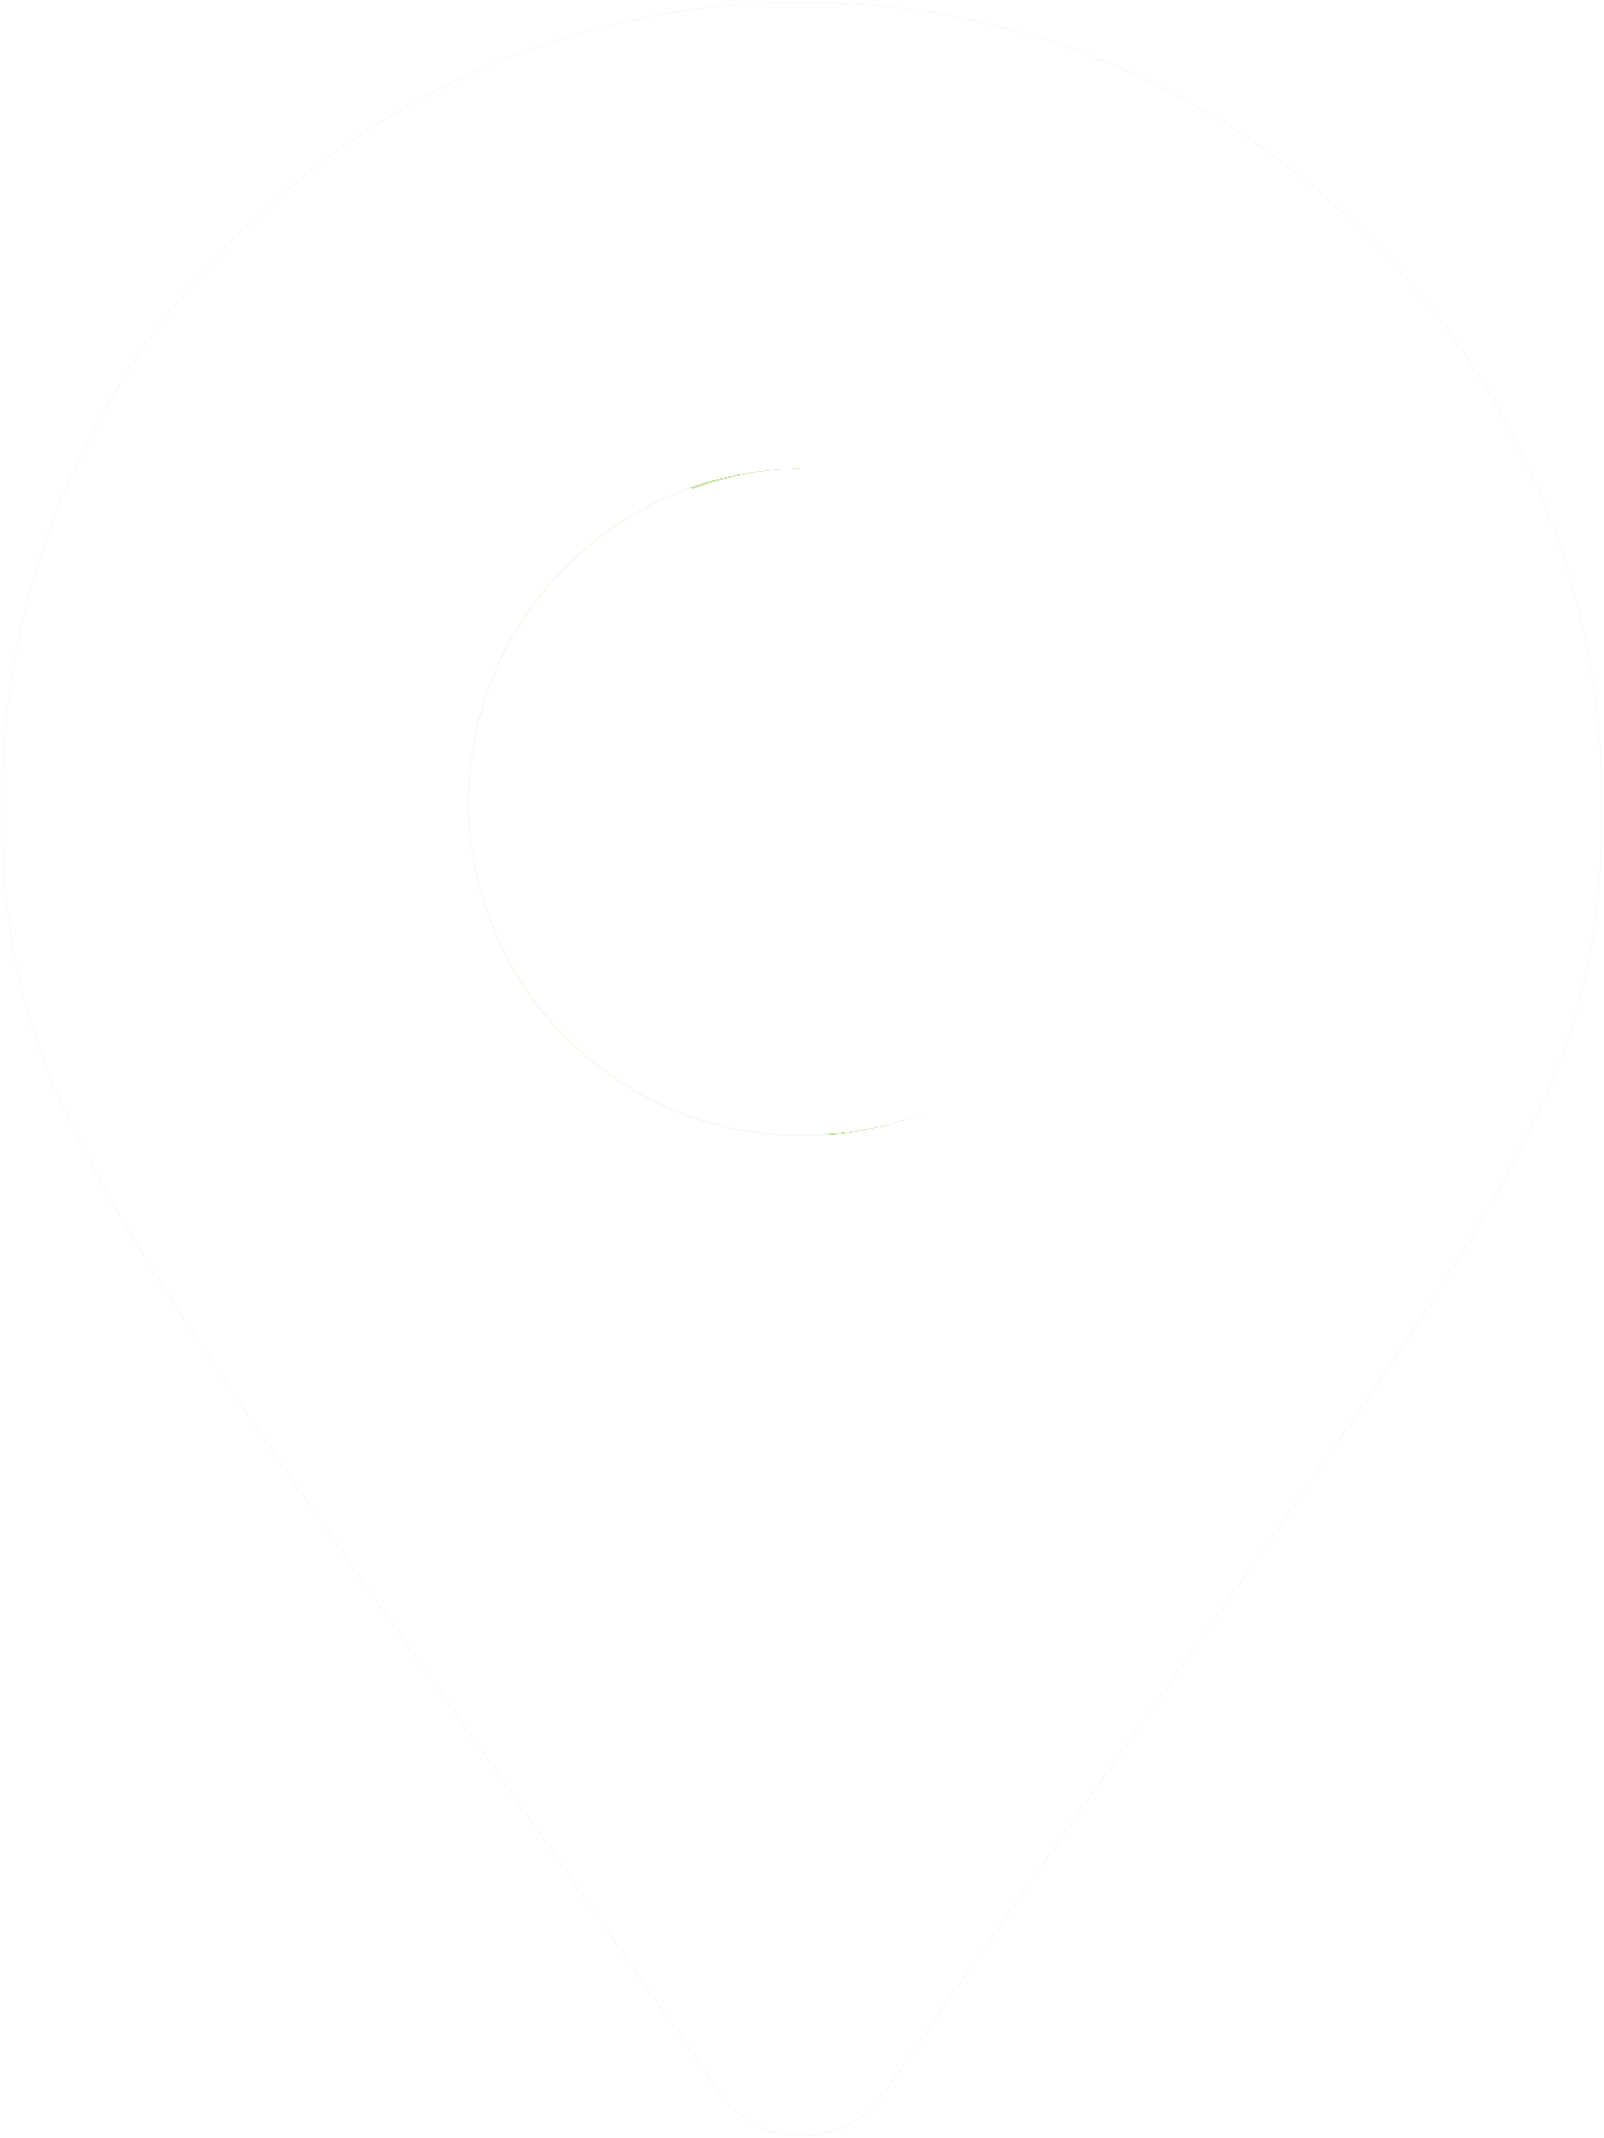 location logo